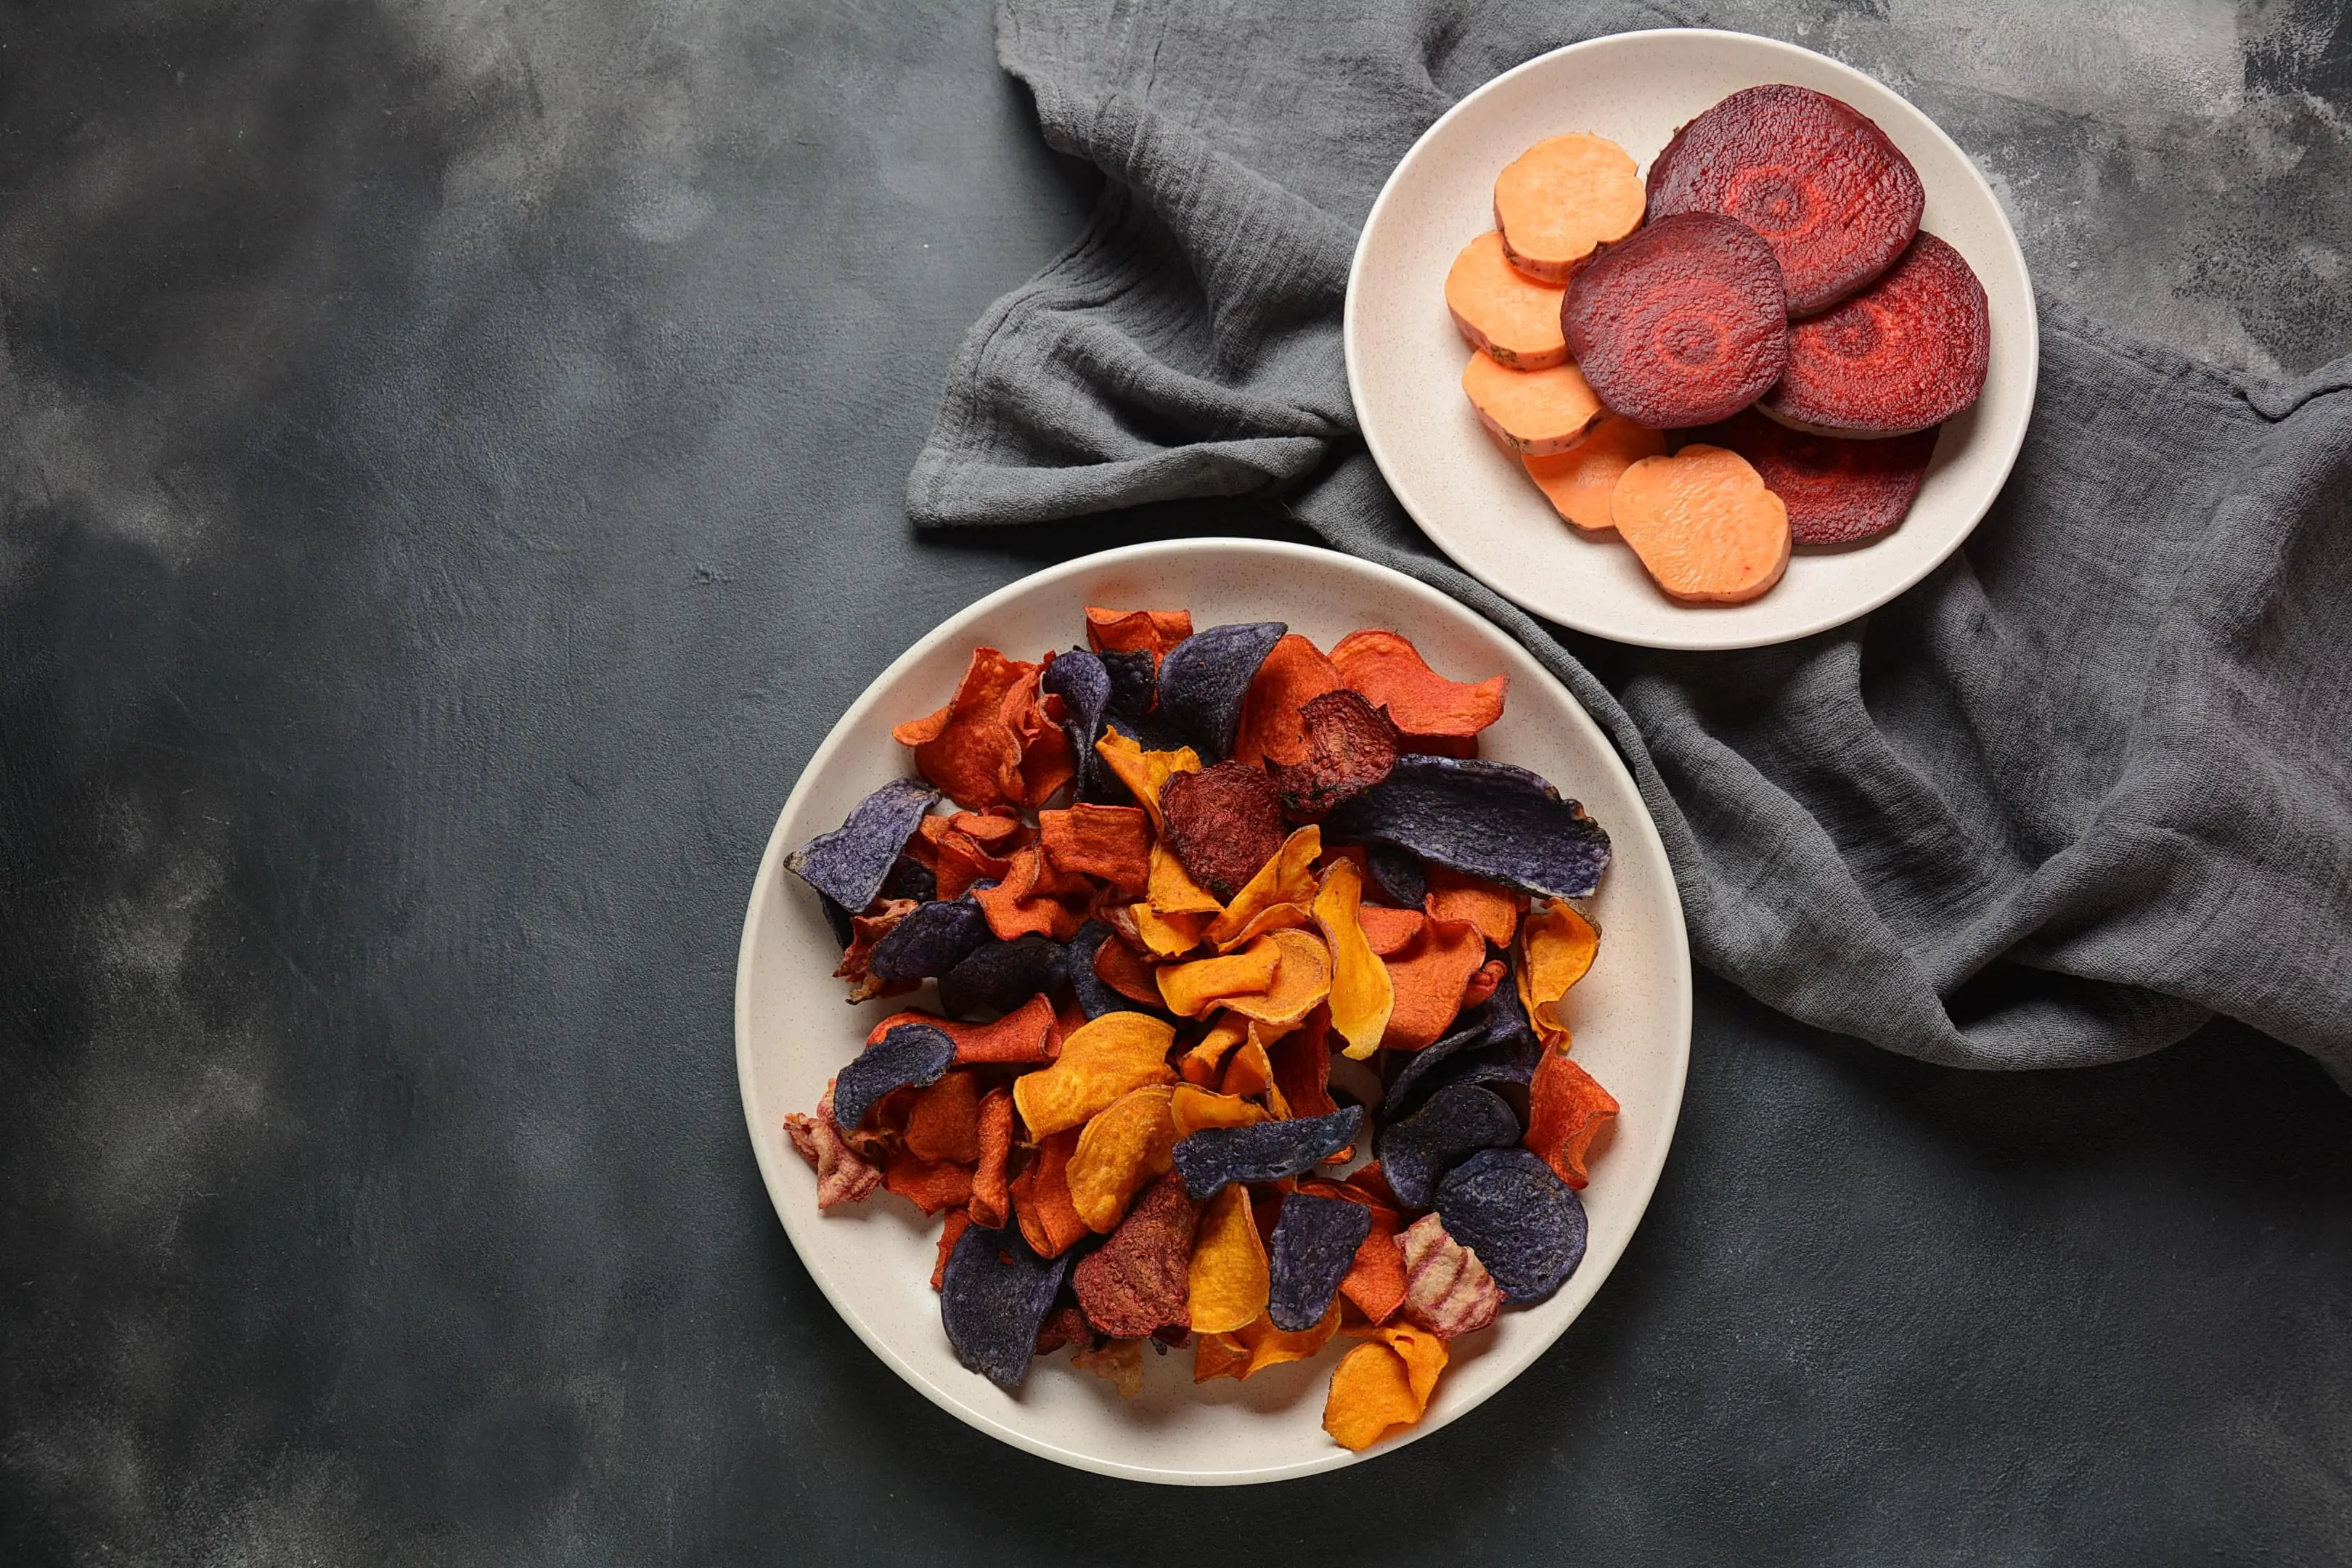 Salt-free baked root vegetable chips — sweet potato, purple sweet potato, carrot and beetroot